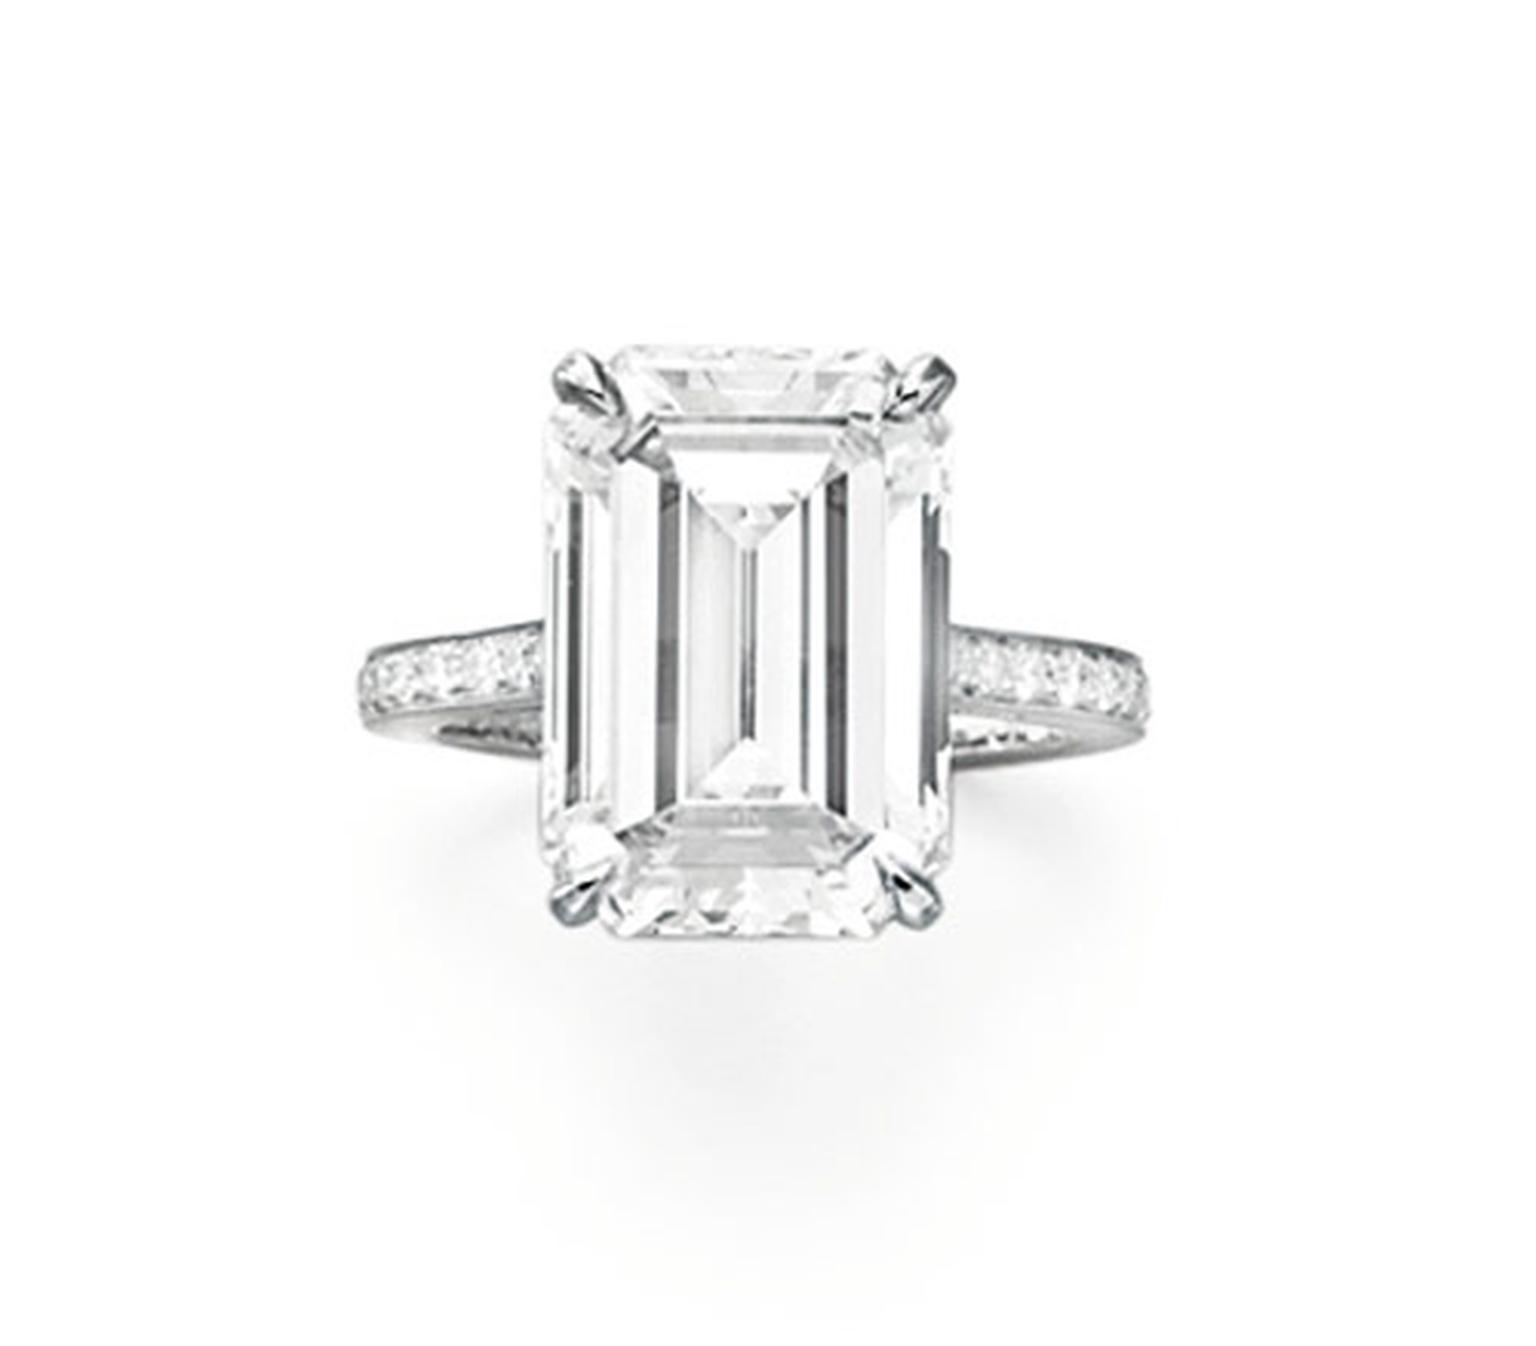 Christies-Rectangular-Cut-Diamond-Ring.jpg